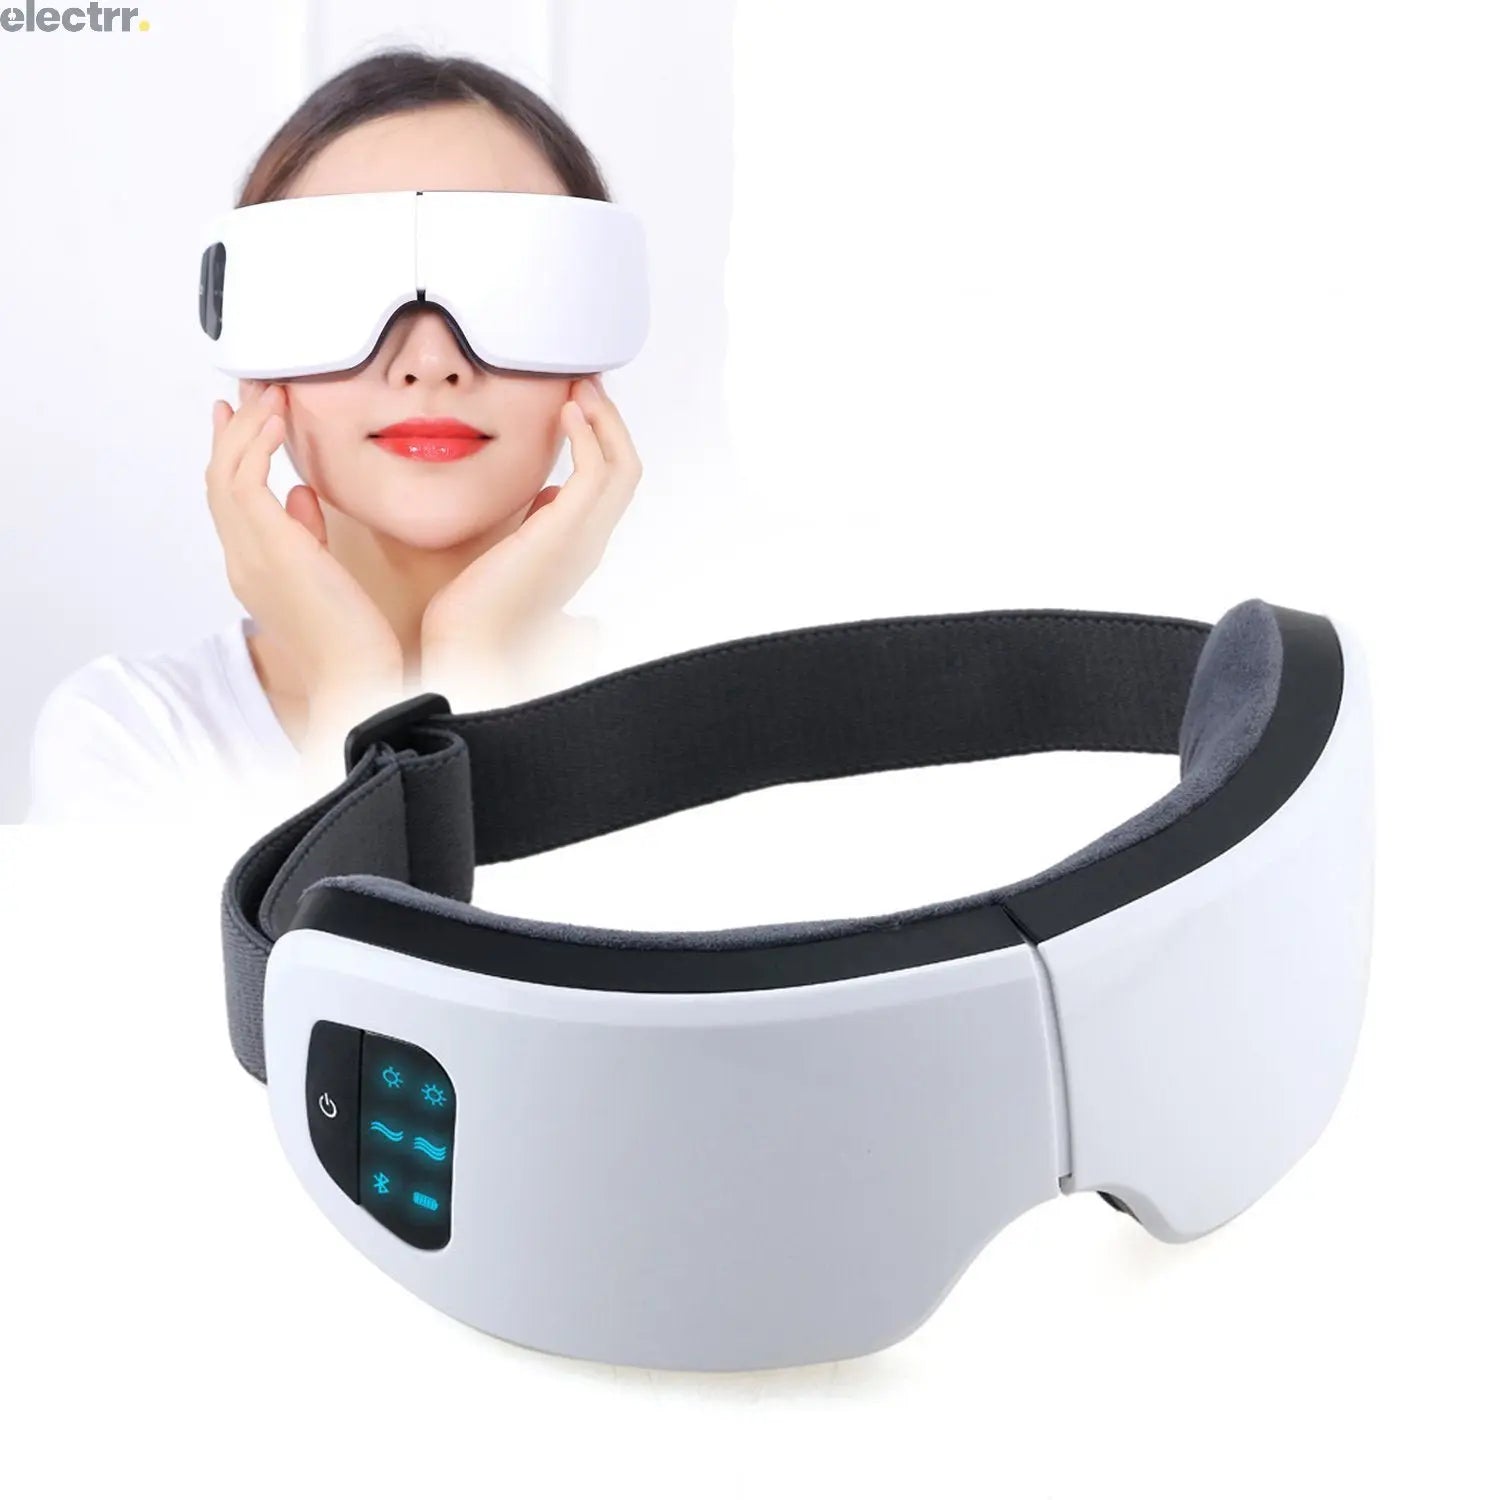 2022 Hot Selling Product 180 Degree Free Folding Eye Massager | Electrr Inc